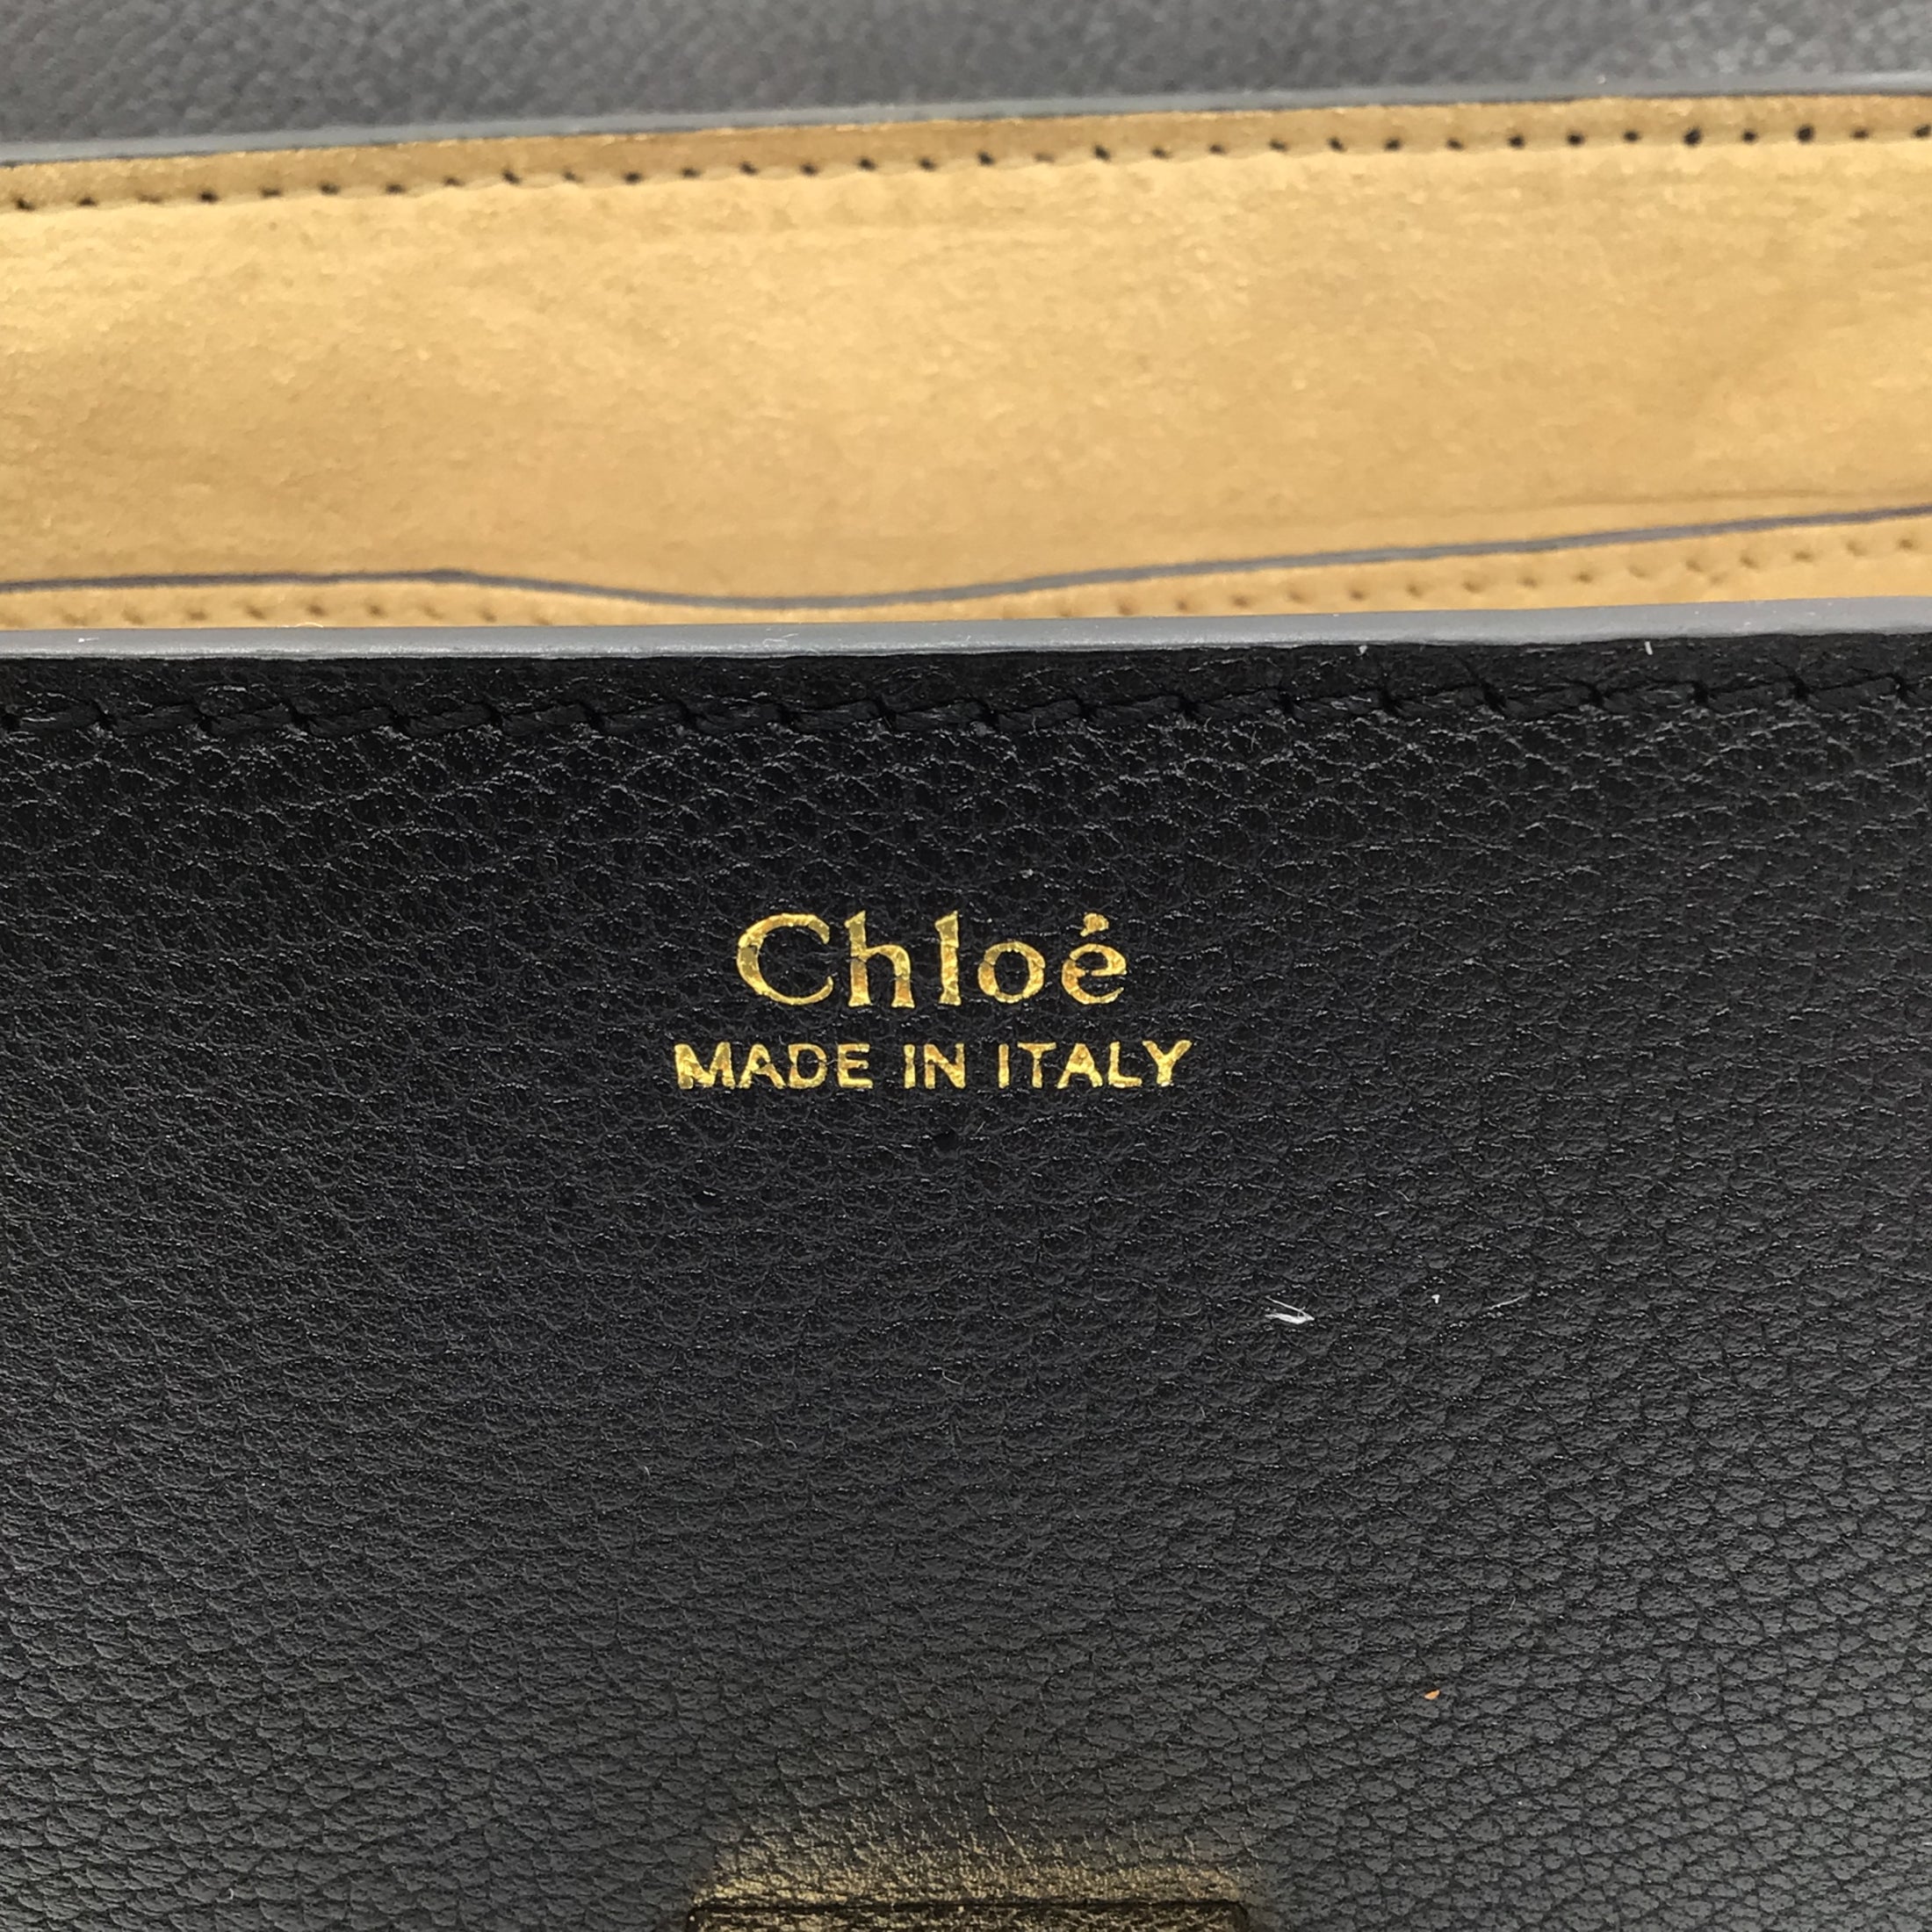 Chloe Drew Black / Gold Chain Strap Grained Leather Shoulder Bag